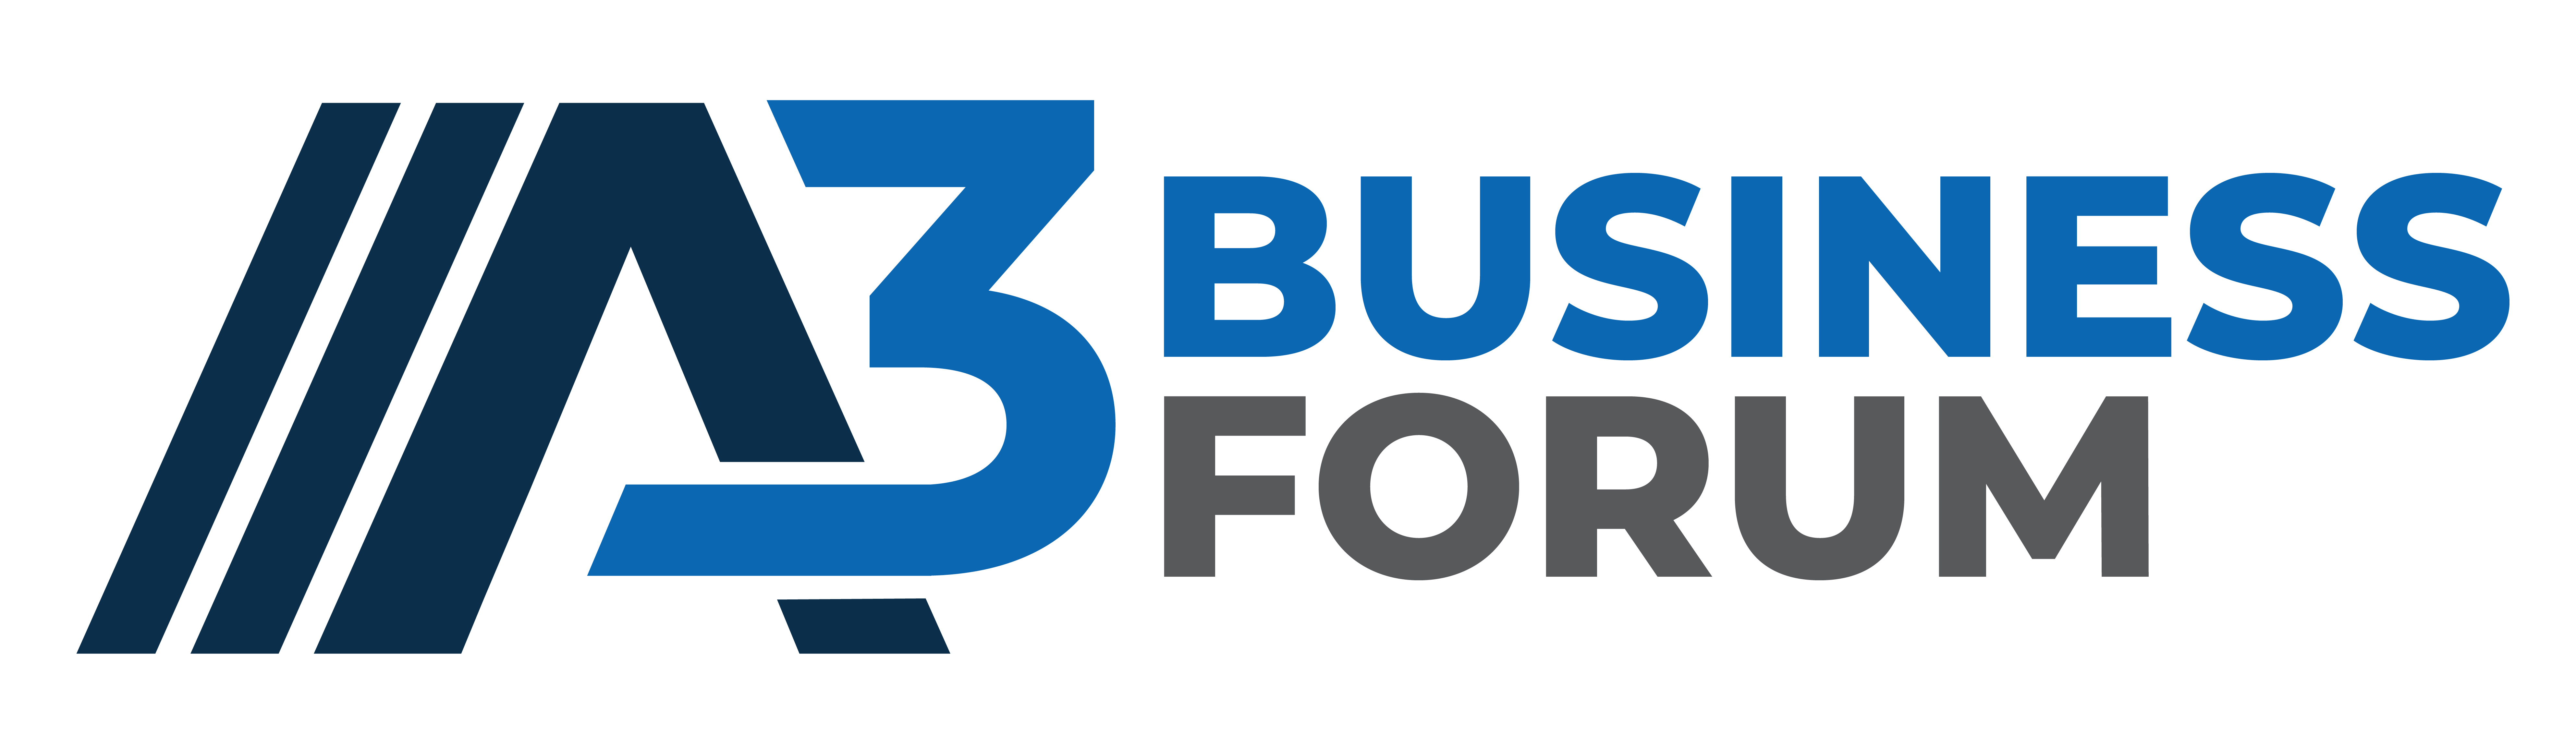 A3 Business Forum 2022